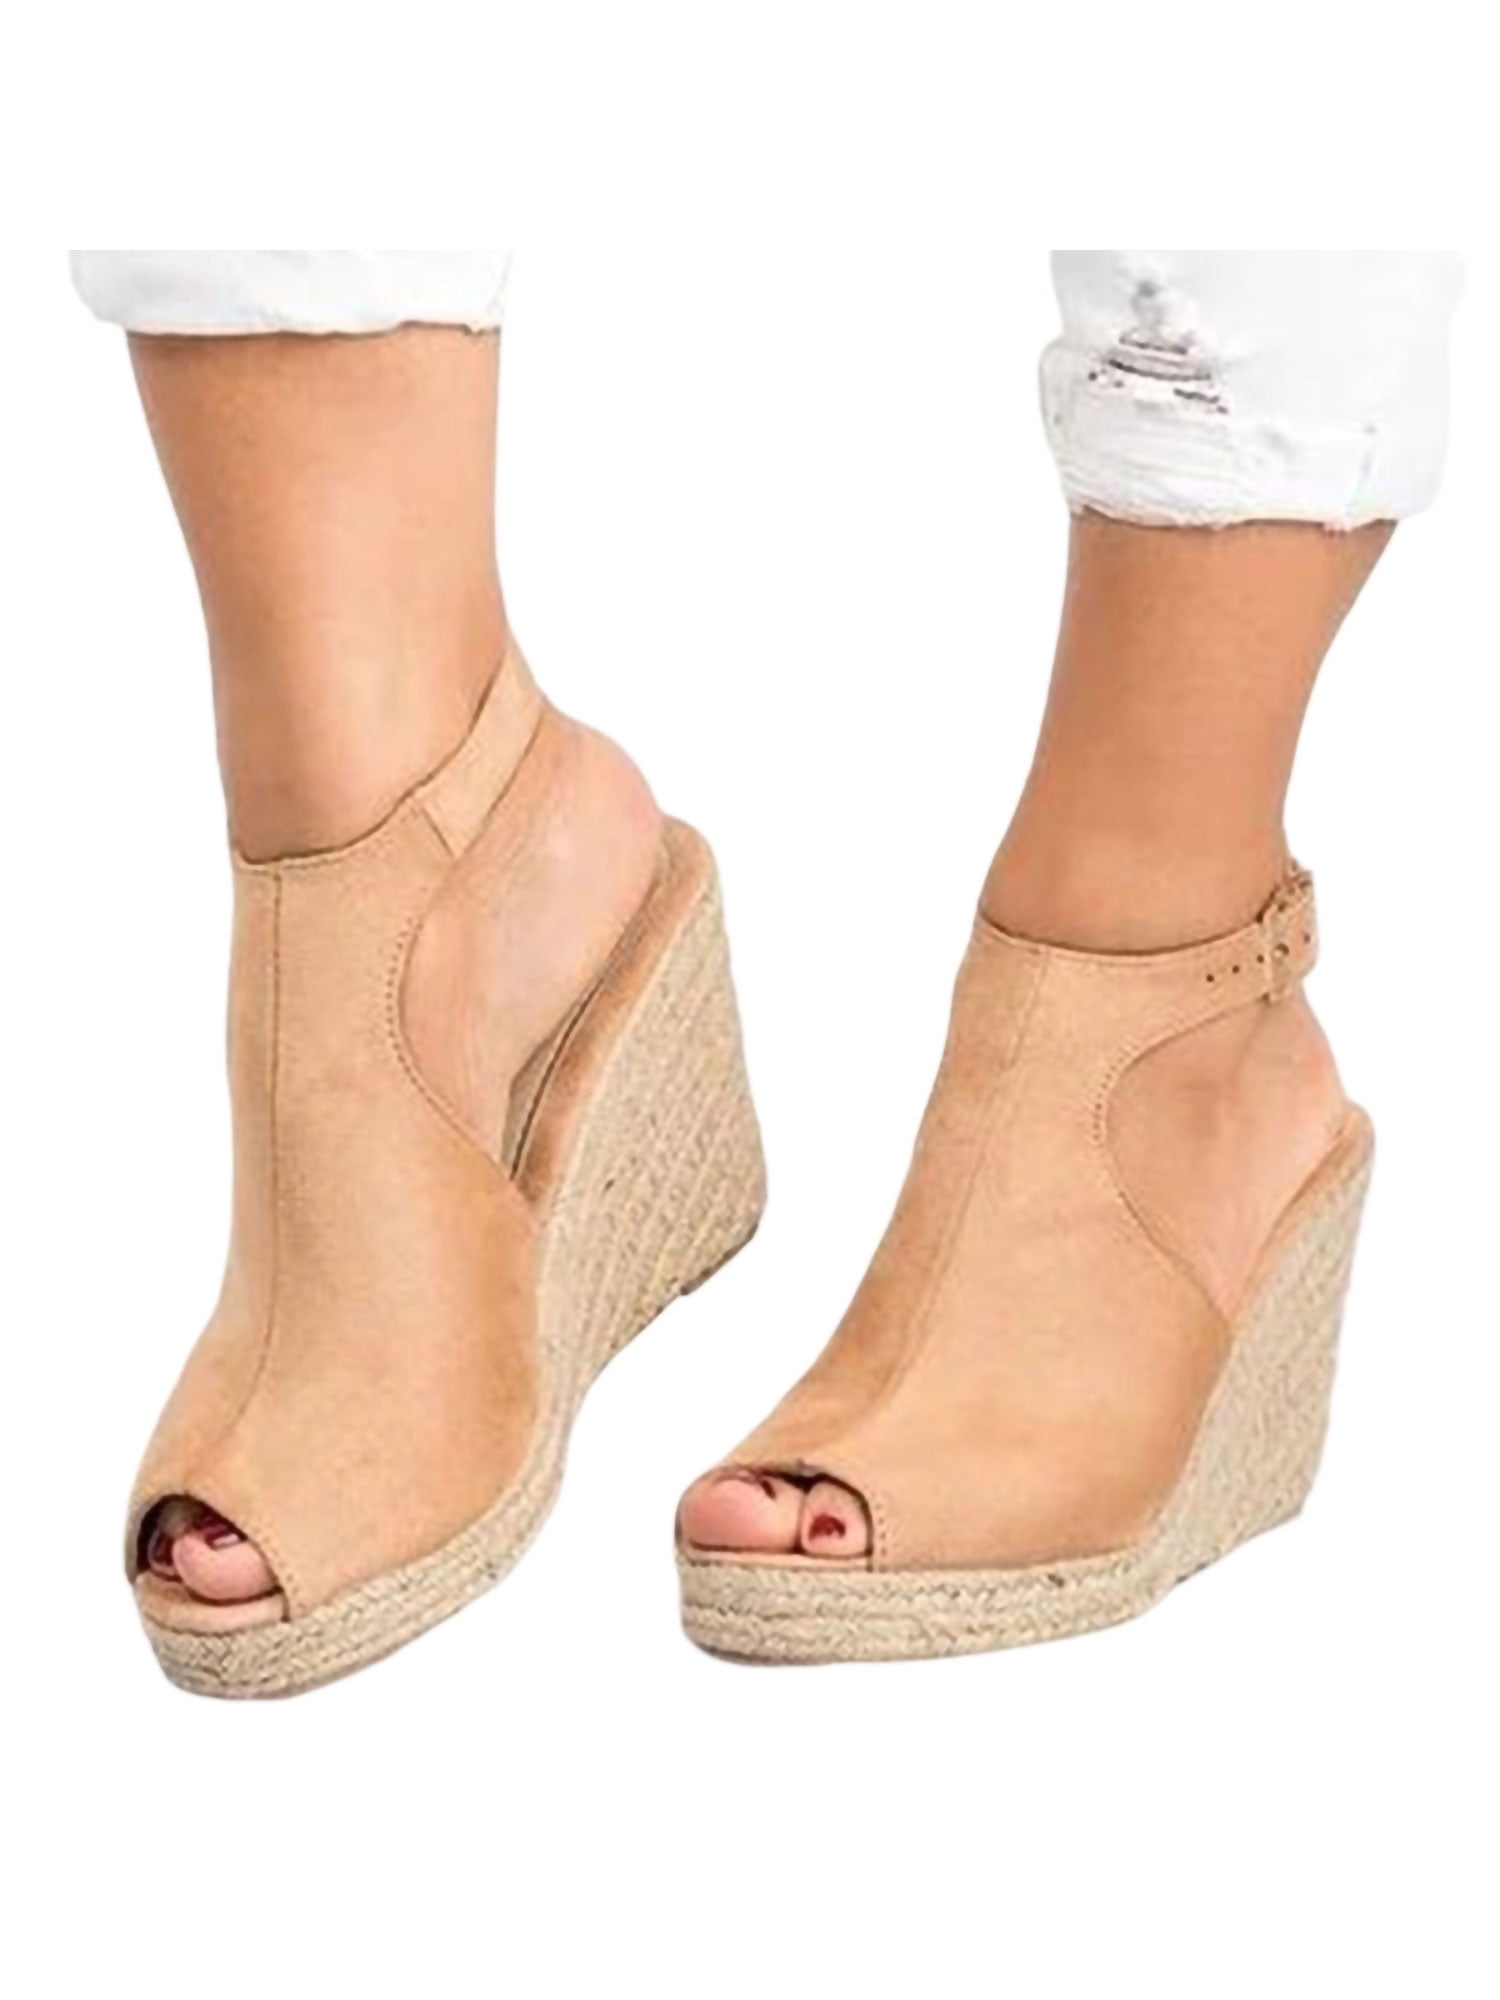 New Womens High Wedge Heel Platform Sandals Ladies Ankle Strap Espadrilles Shoes 